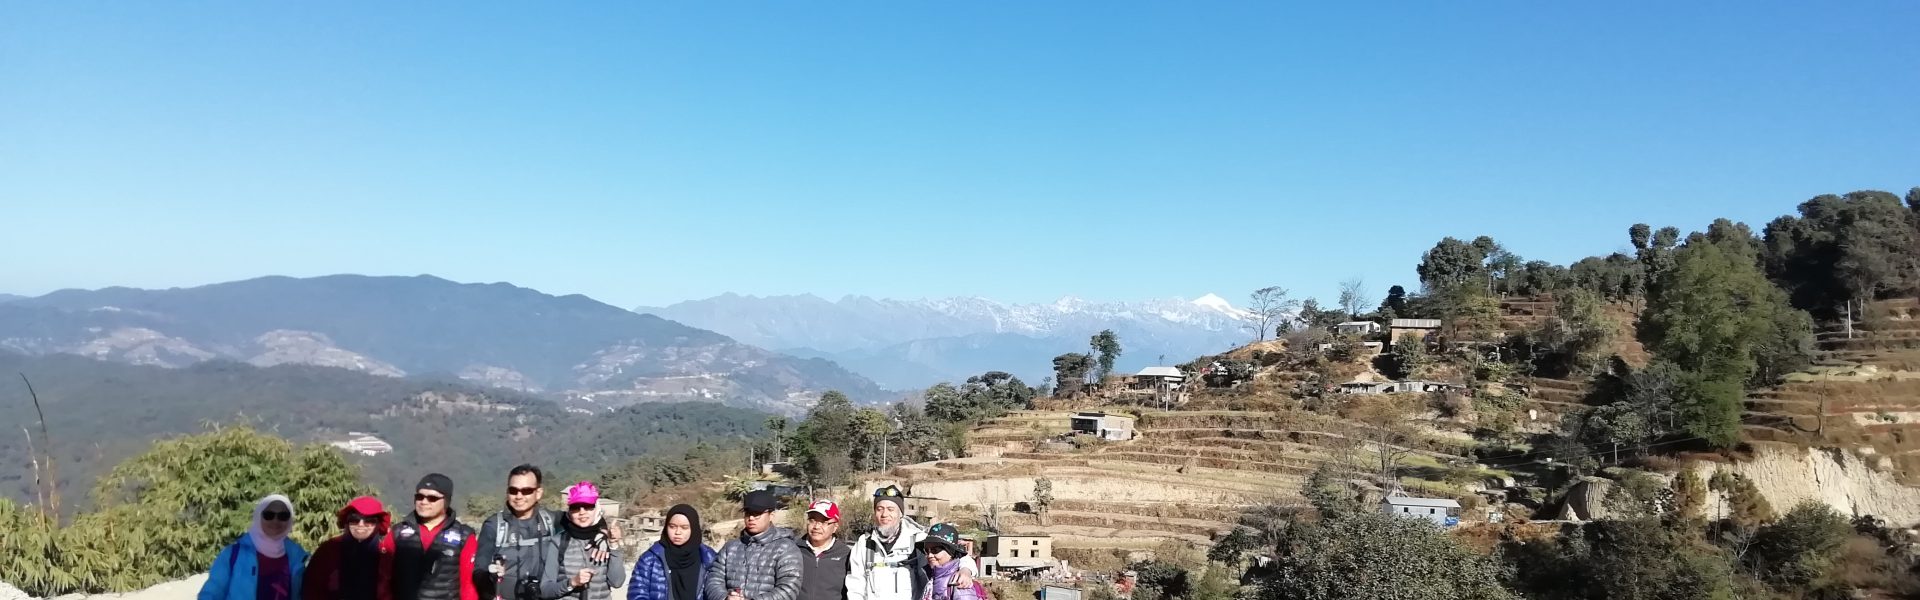 Kathmandu Nagarkot Hiking Tour